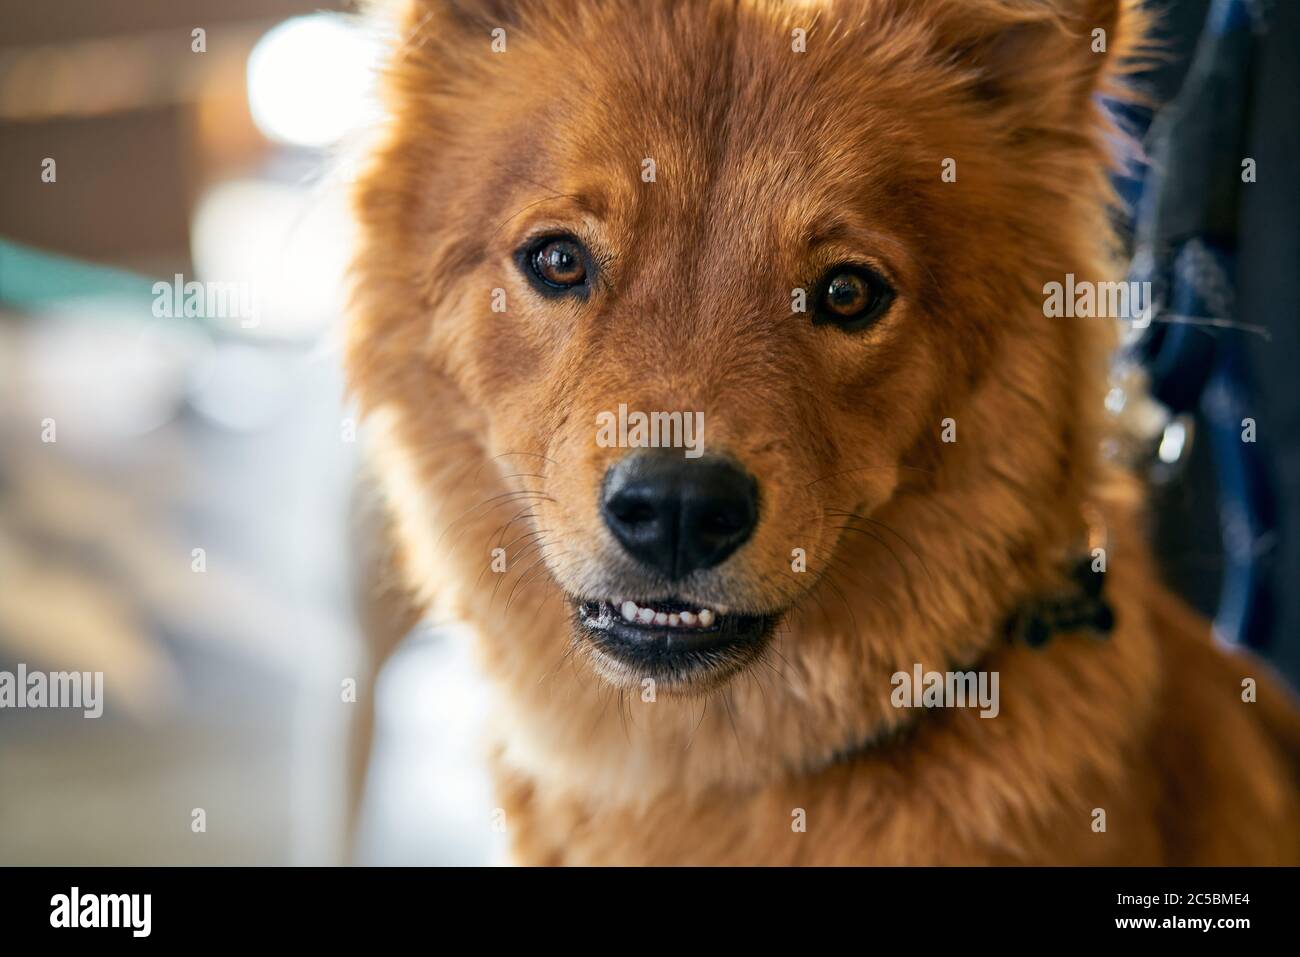 Golden-dog looking at camera Stock Photo